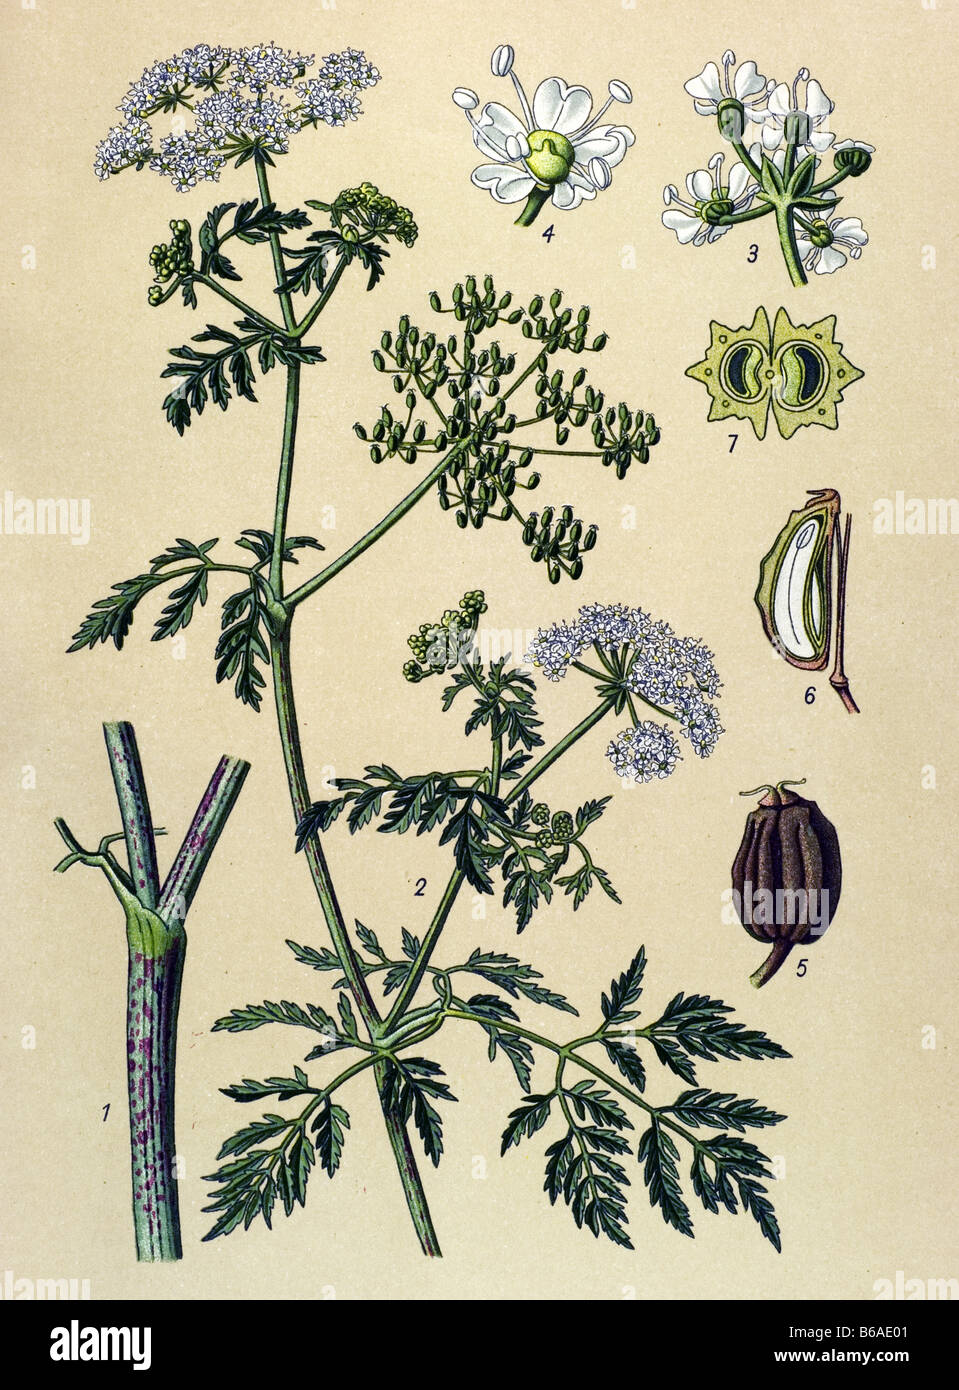 Schierling, Conium giftige Pflanzen Illustrationen Stockfoto